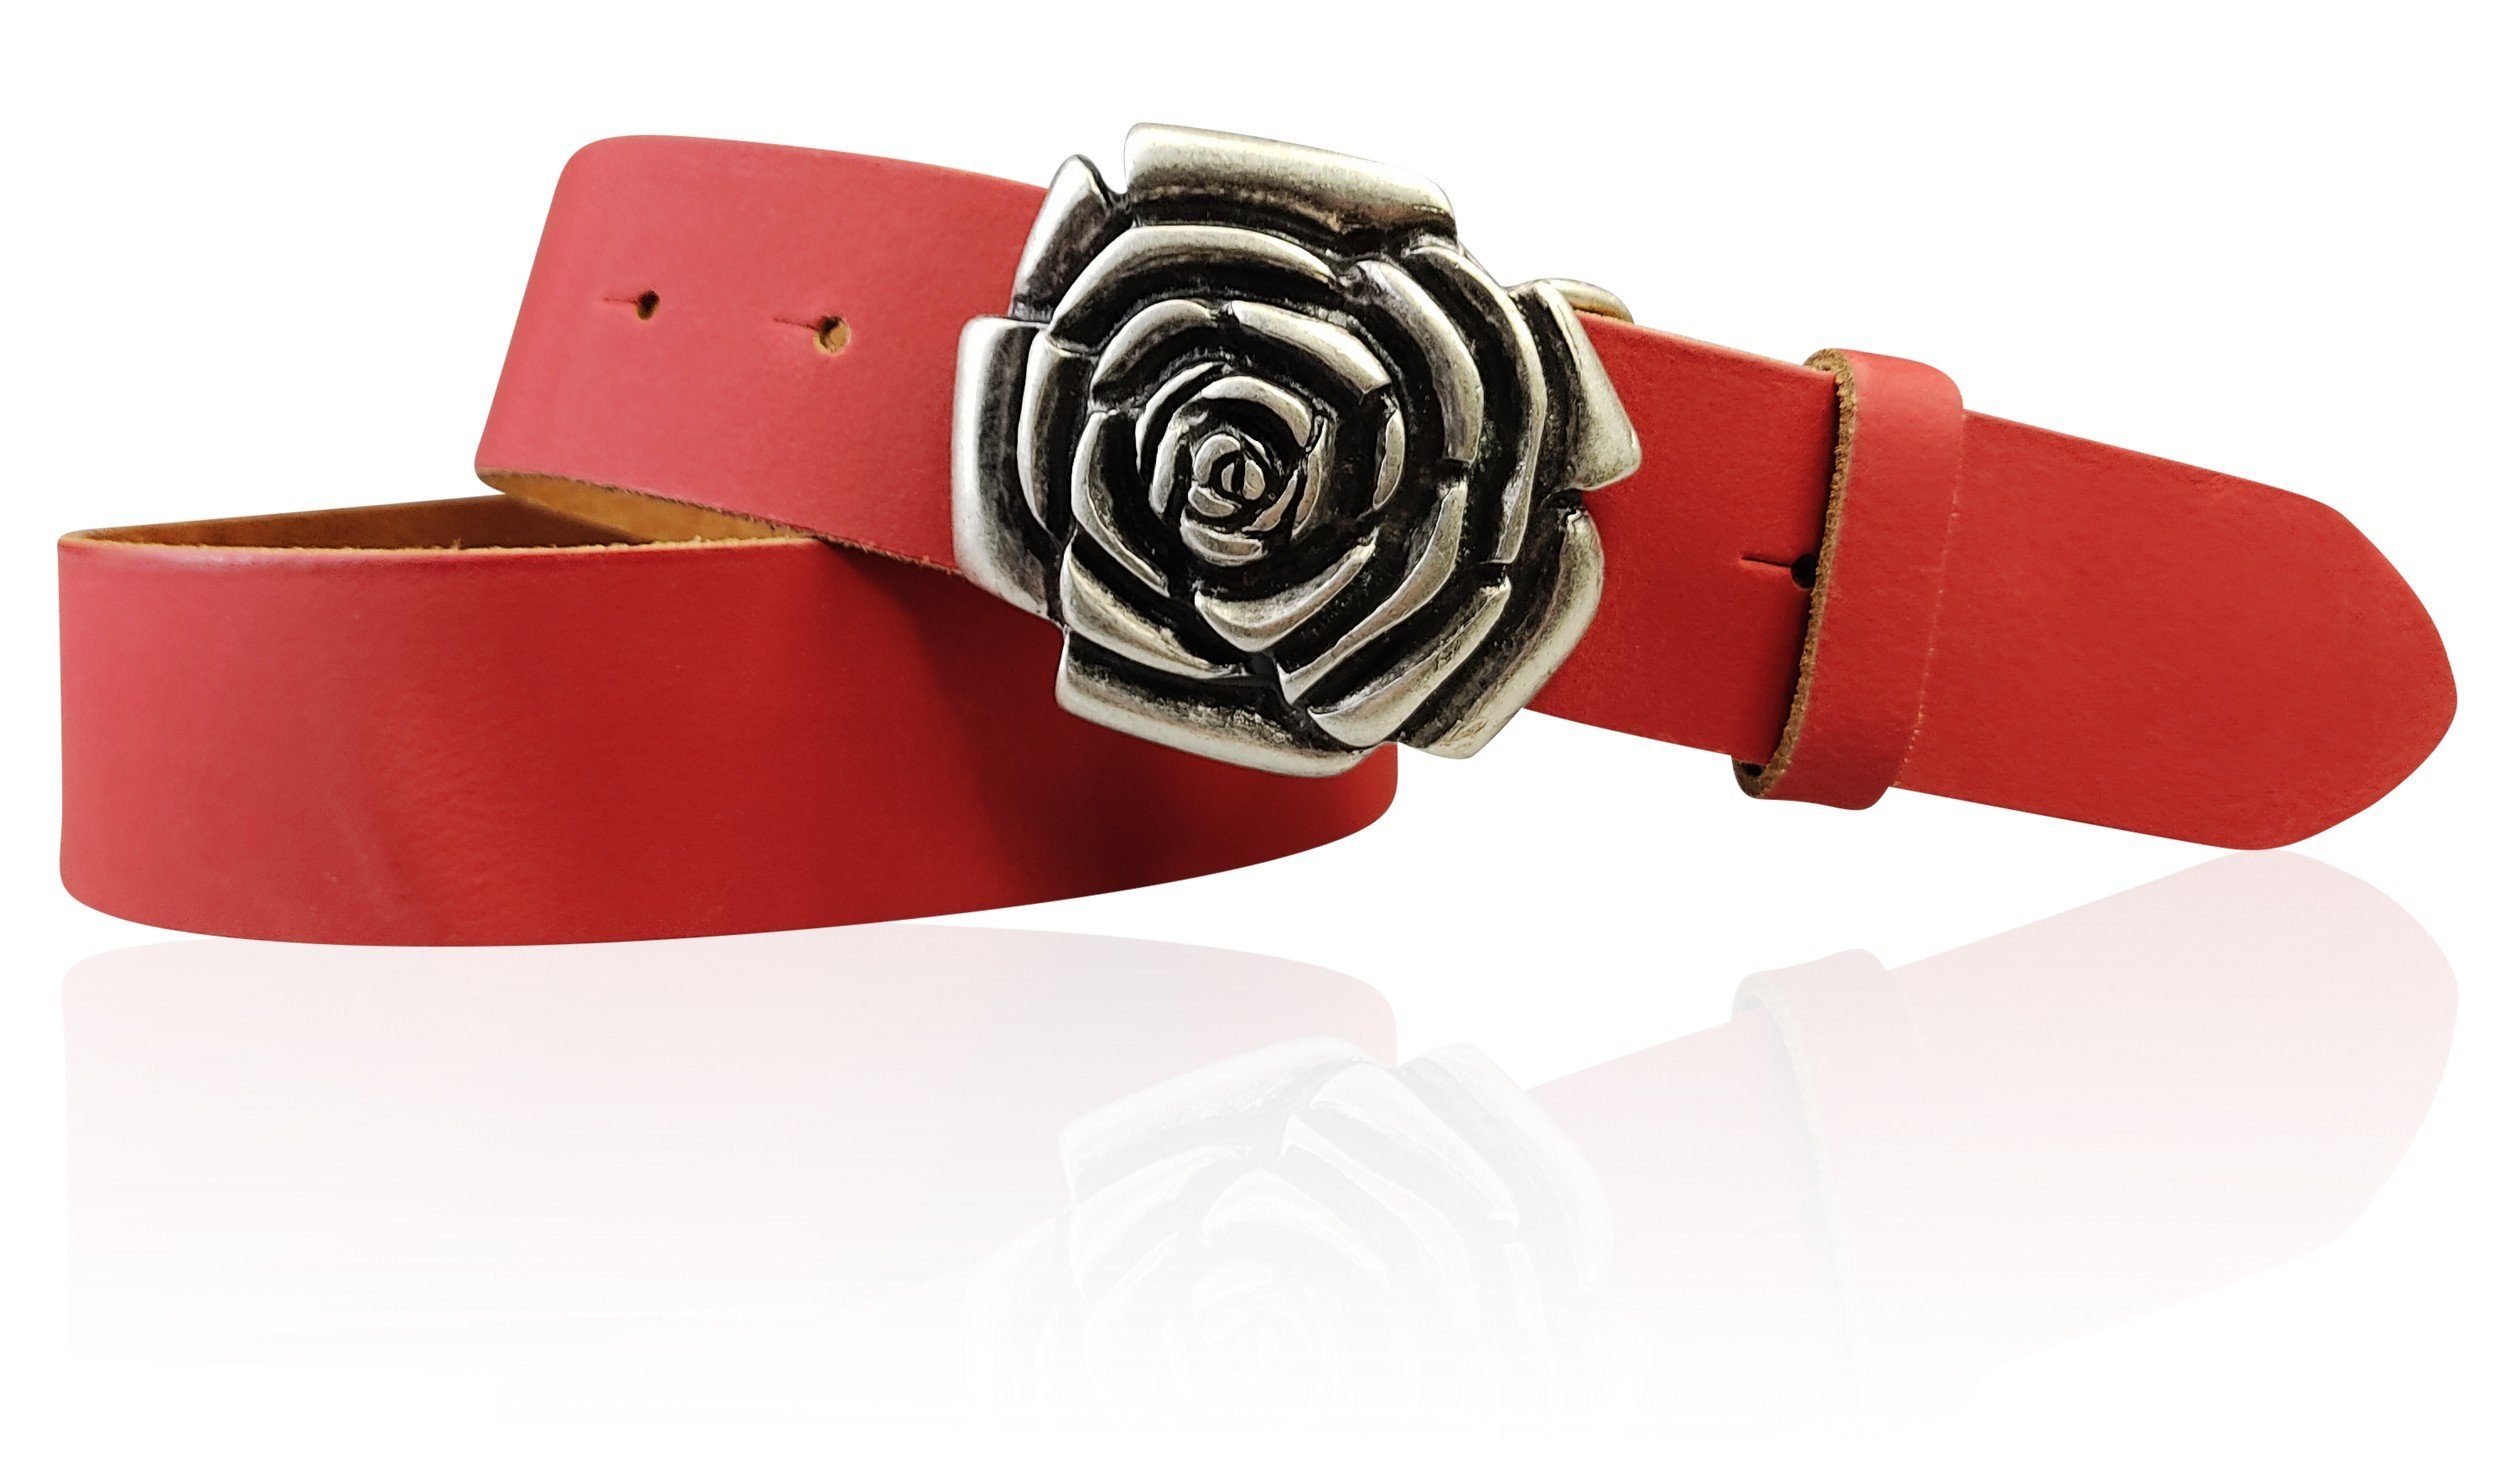 FRONHOFER Koppelgürtel 18090 Damengürtel mit Rosenblüte Gürtelschnalle, silber, 4 cm Ledergürtel Rot | Koppelgürtel